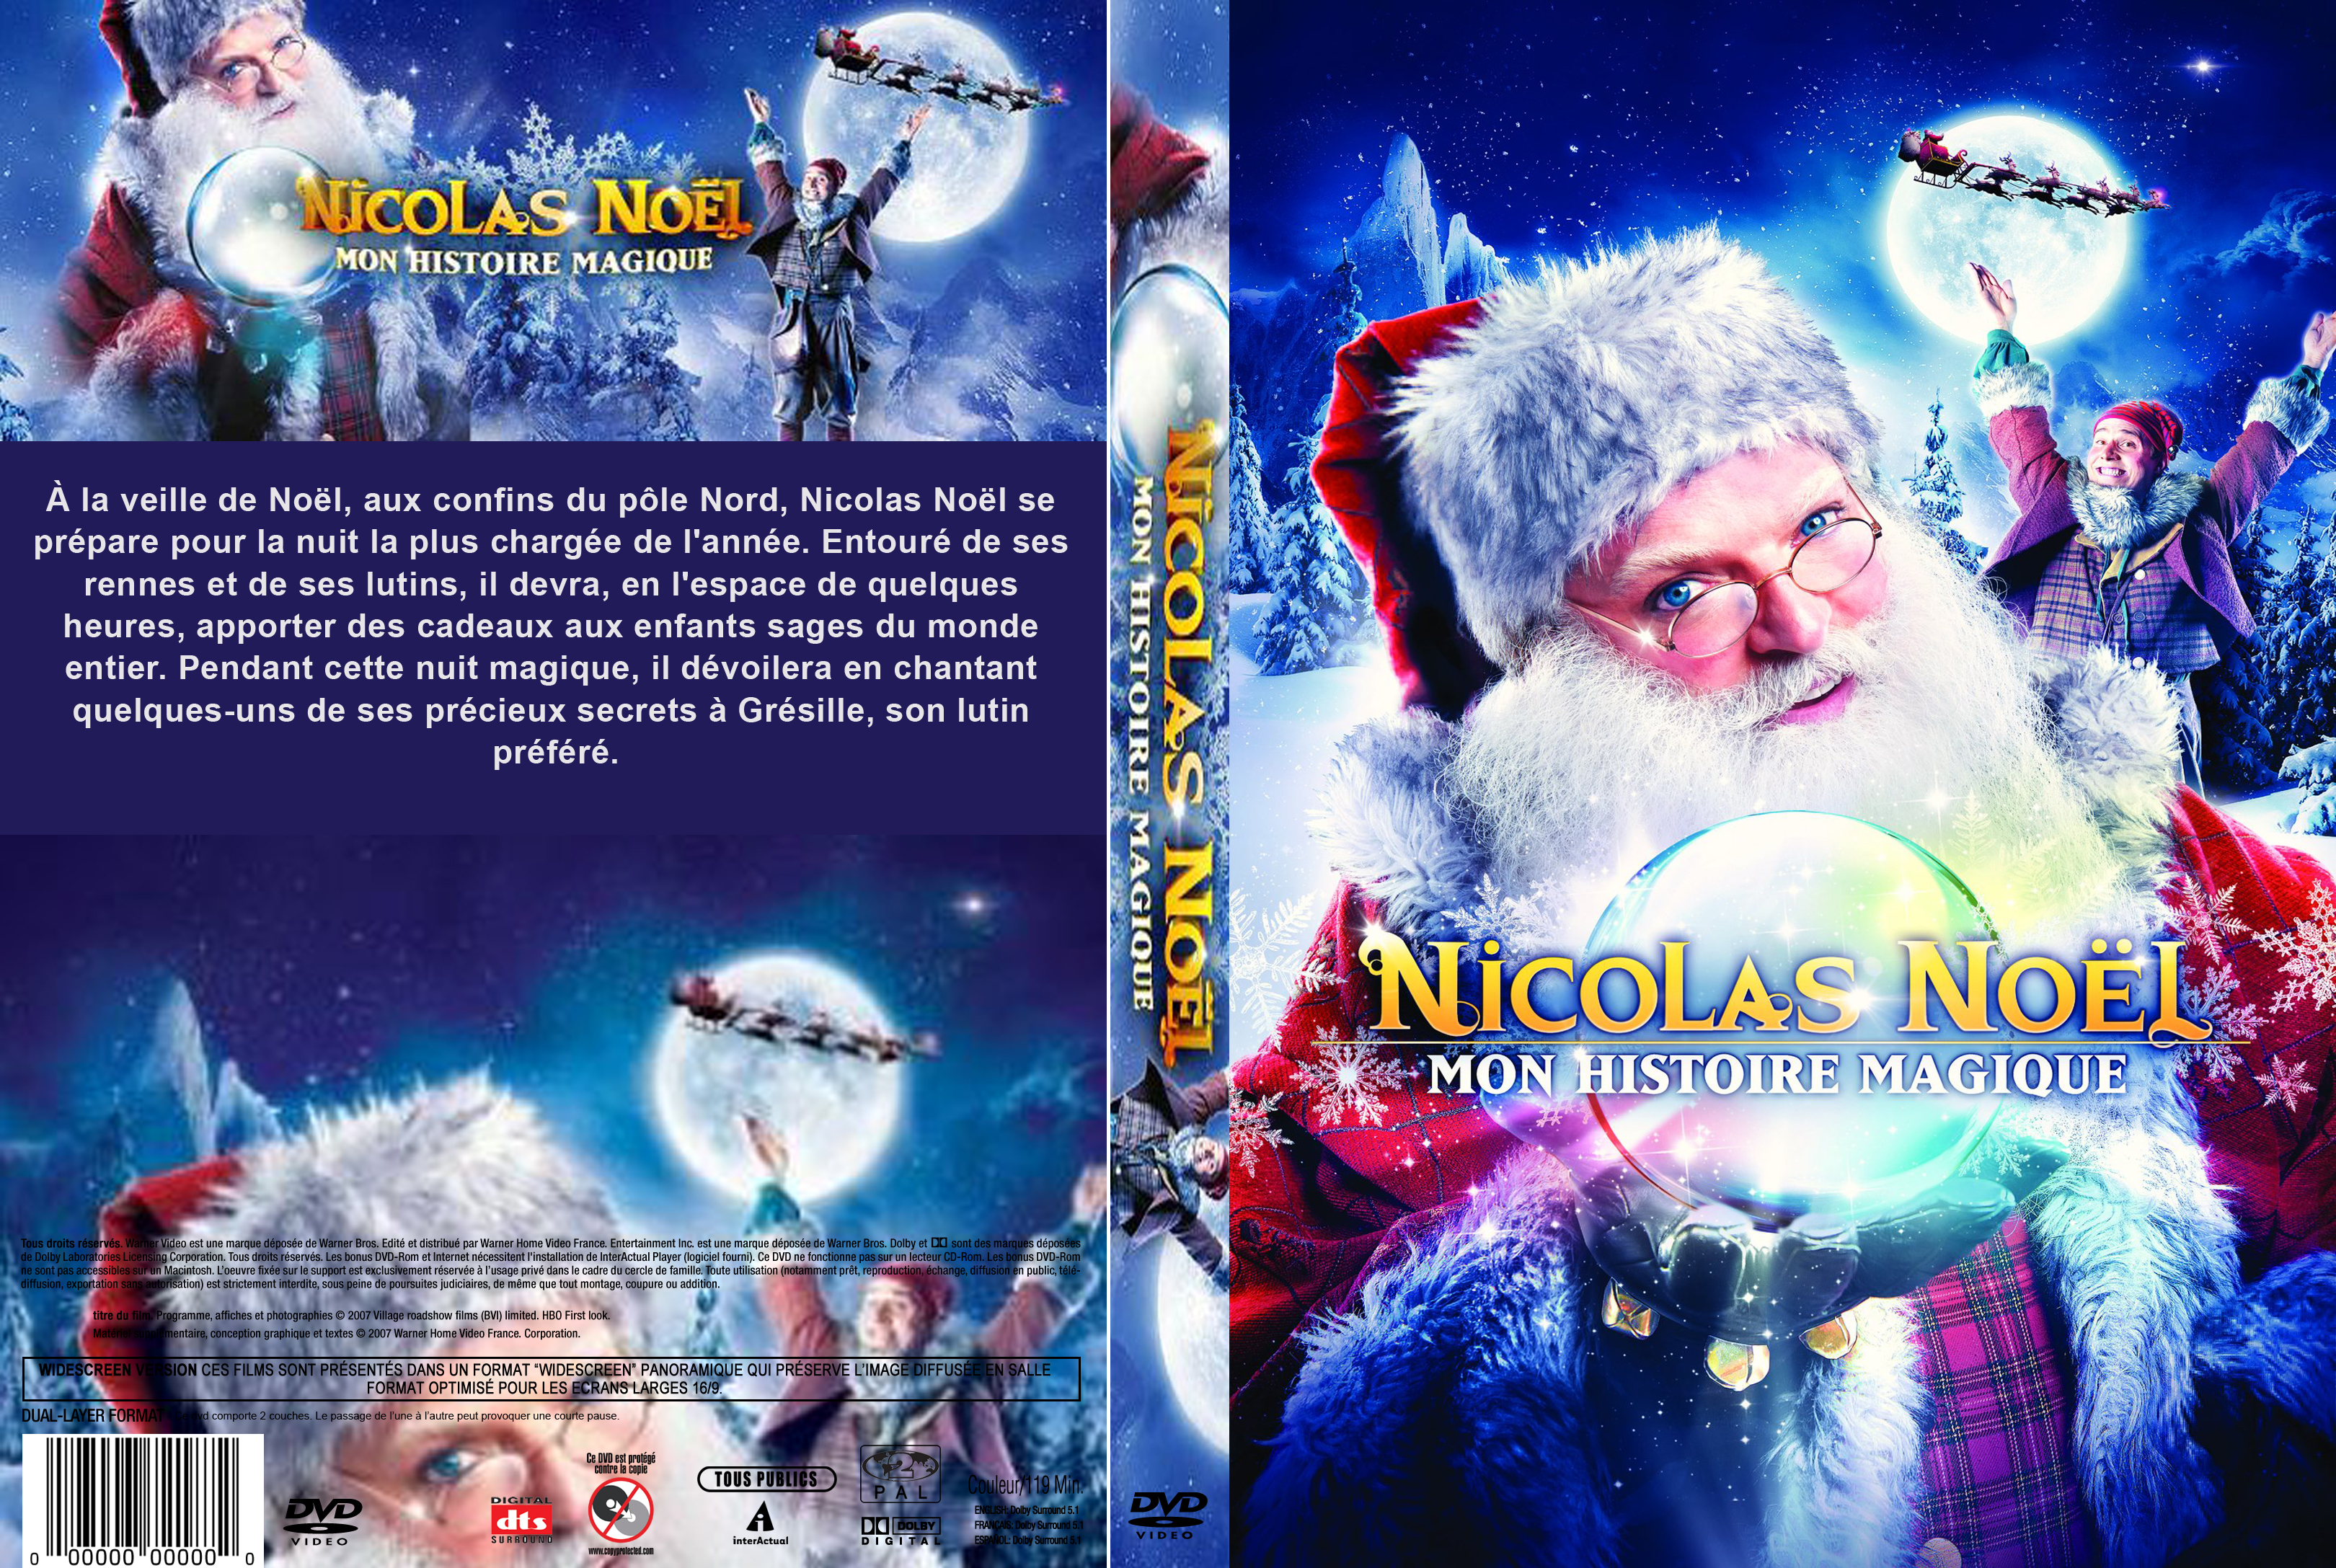 Jaquette DVD Nicolas noel custom